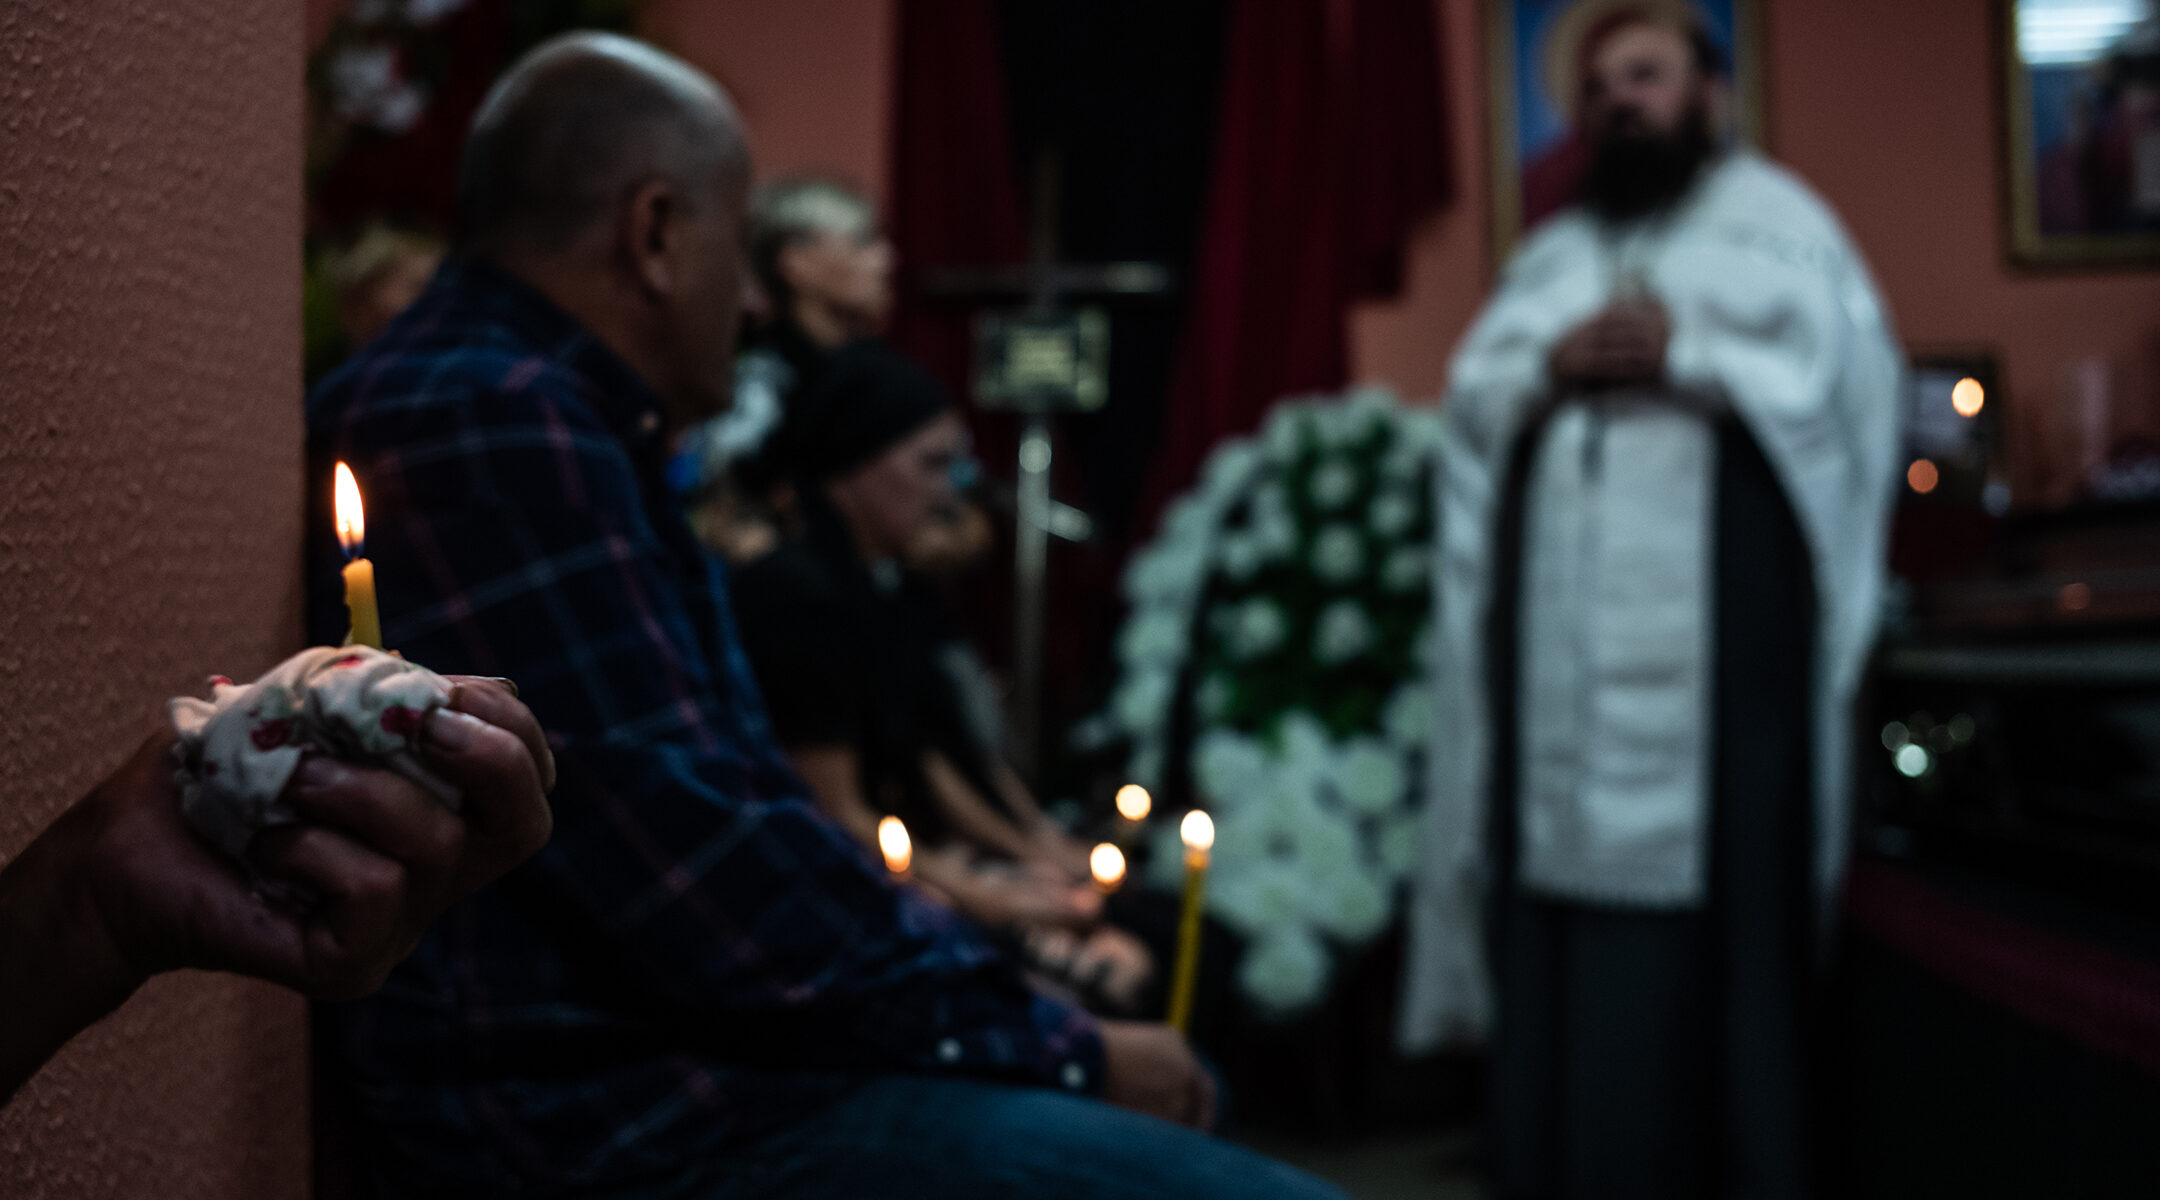 A priest prays at a funeral in Maladzyechna, Belarus on August 25, 2020. (Misha Friedman/Getty Images)